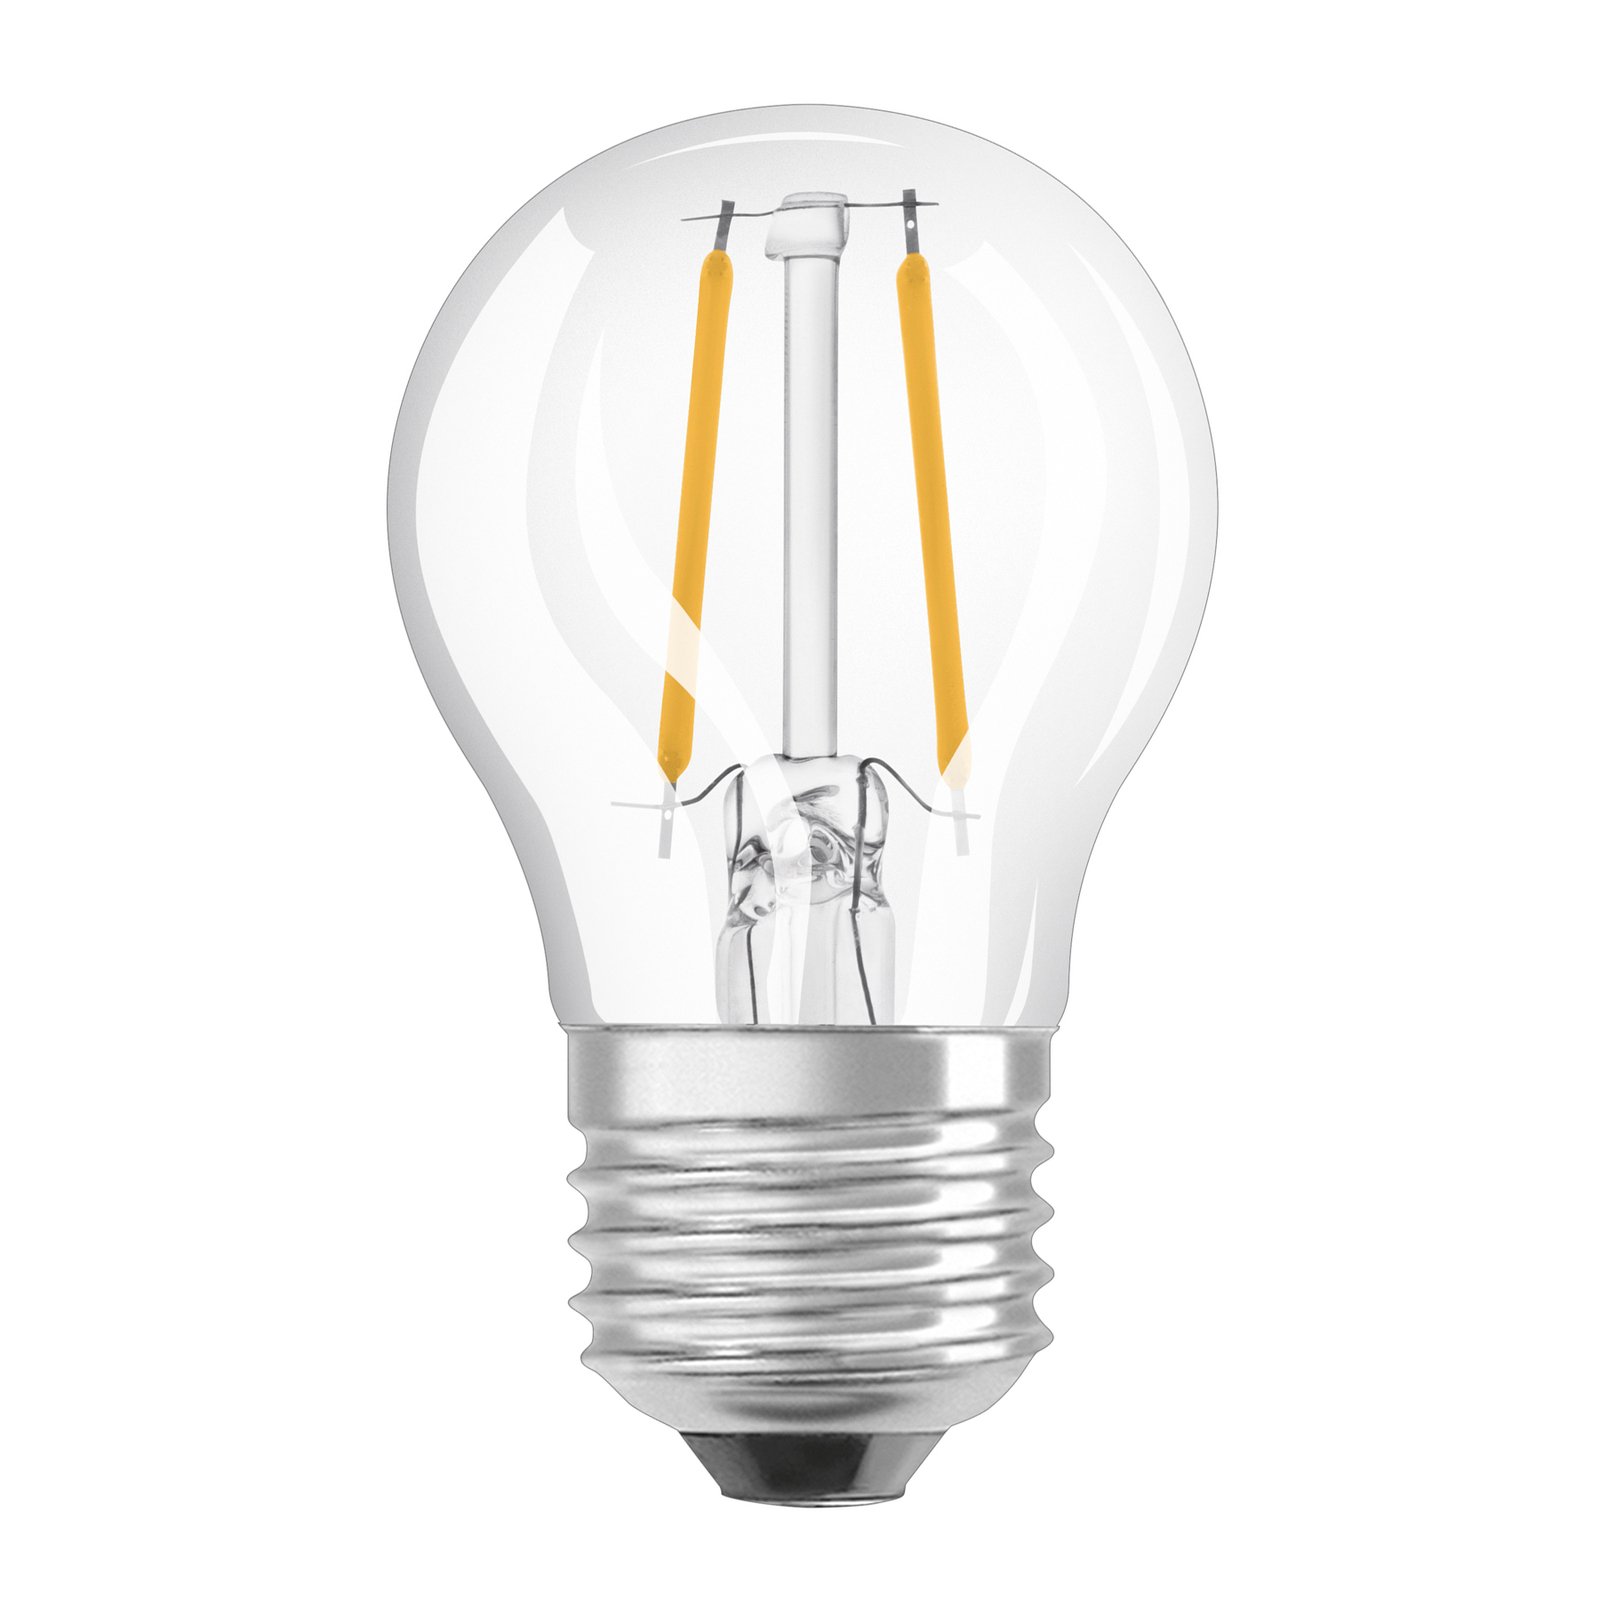 OSRAM golf ball LED bulb E27 1.5W filament 827